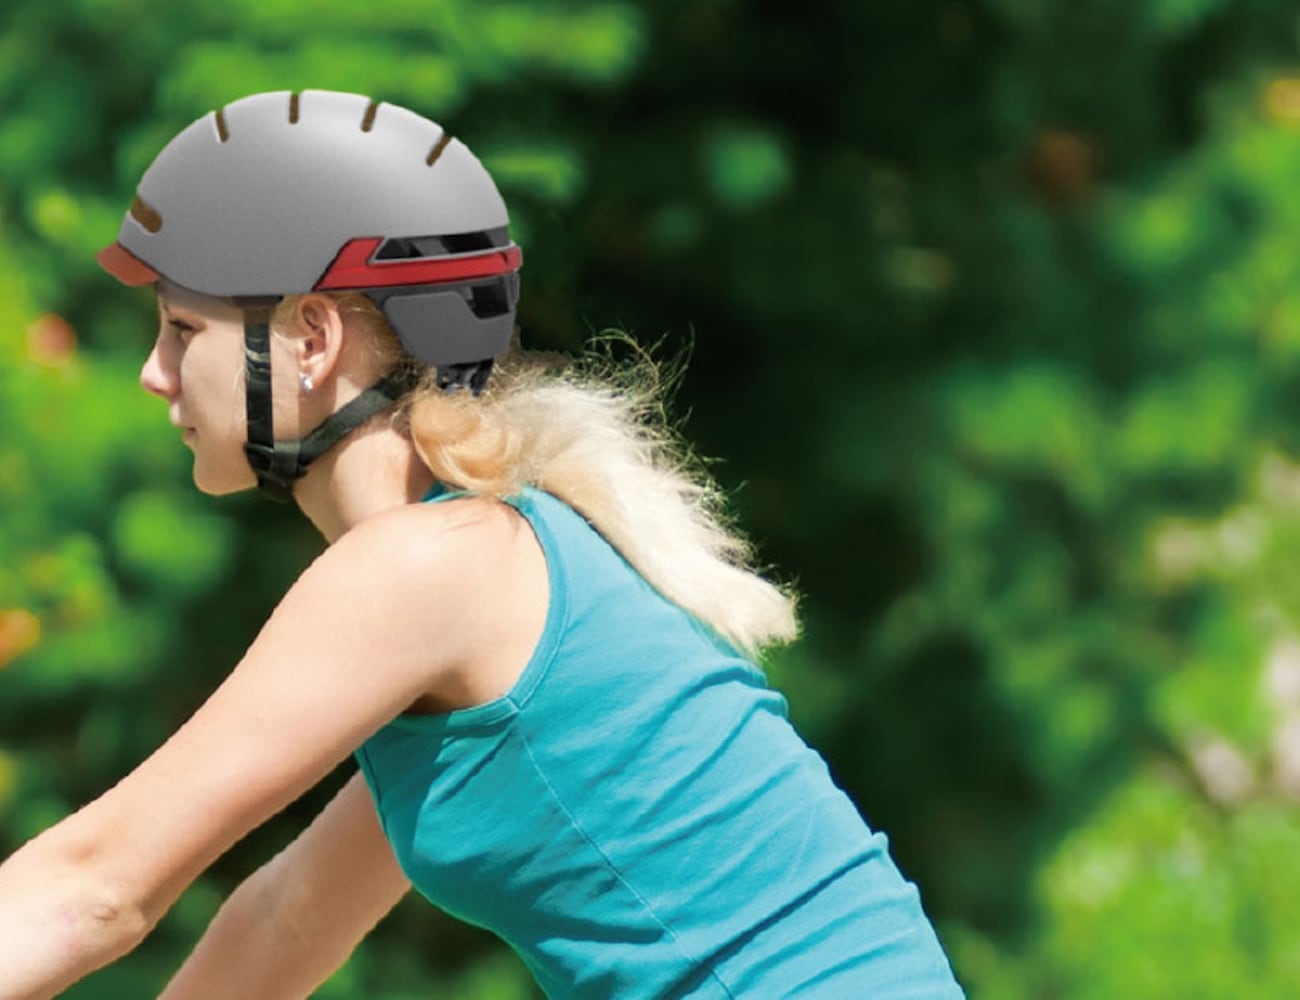 LIVALL BH51M Smart Bike Helmet